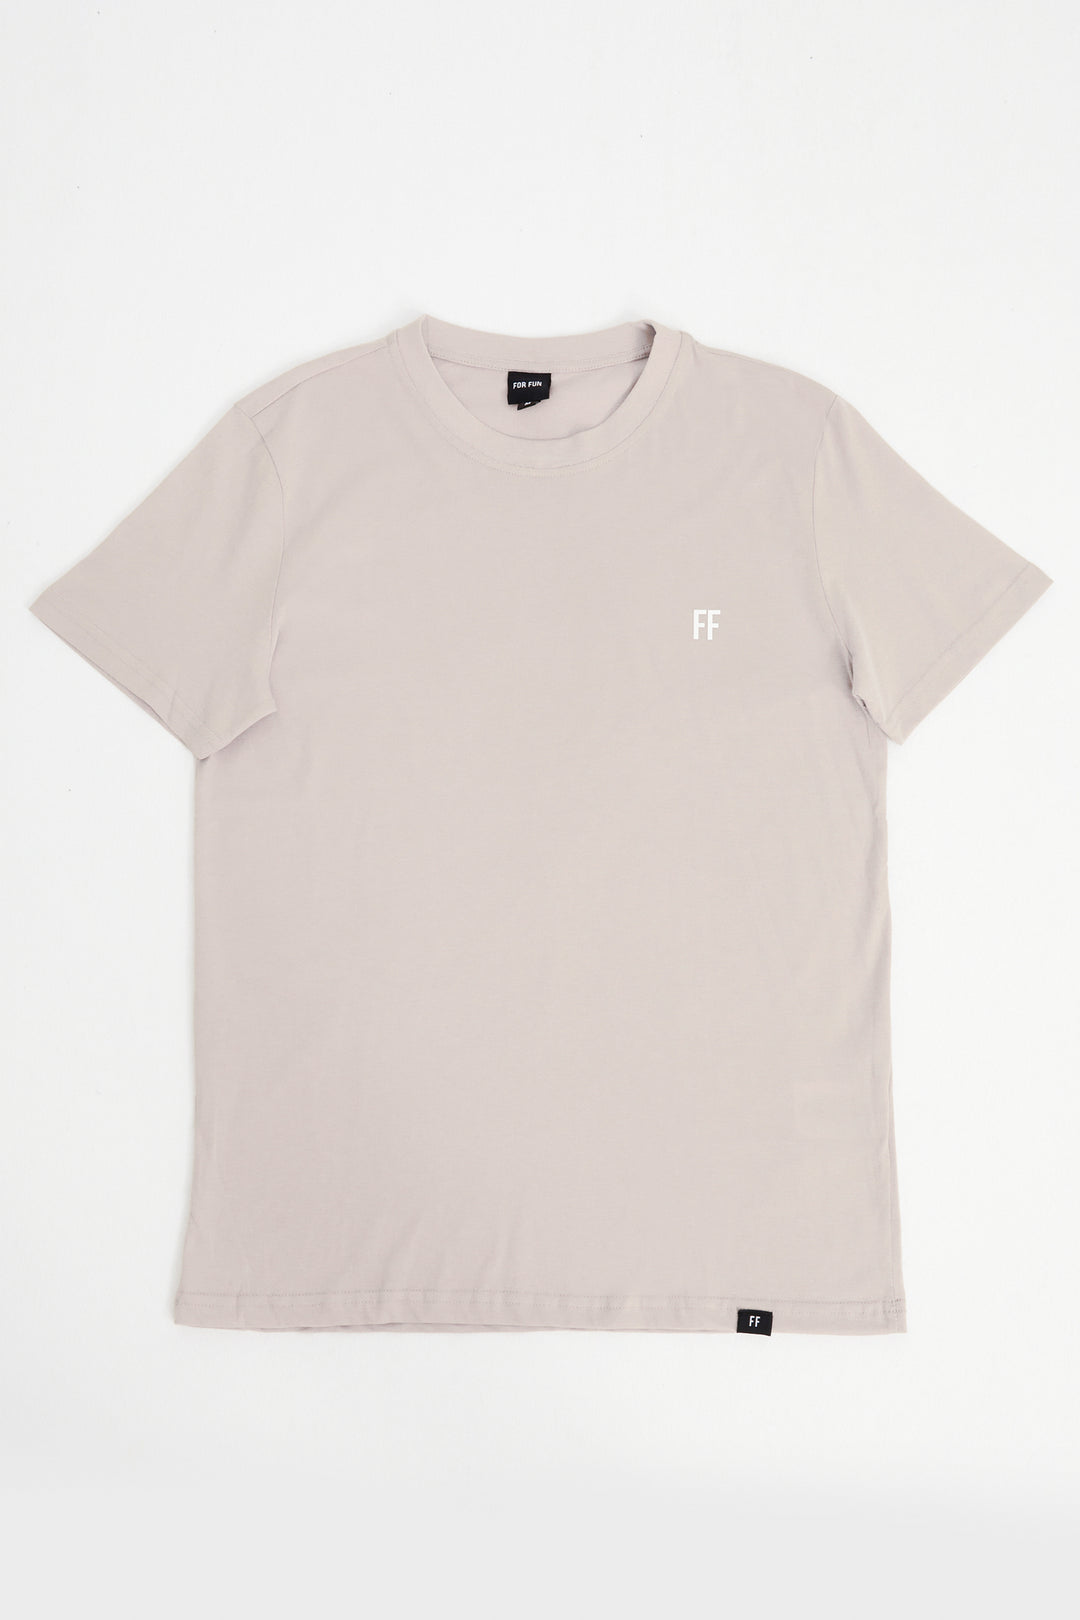 FF / T-shirt